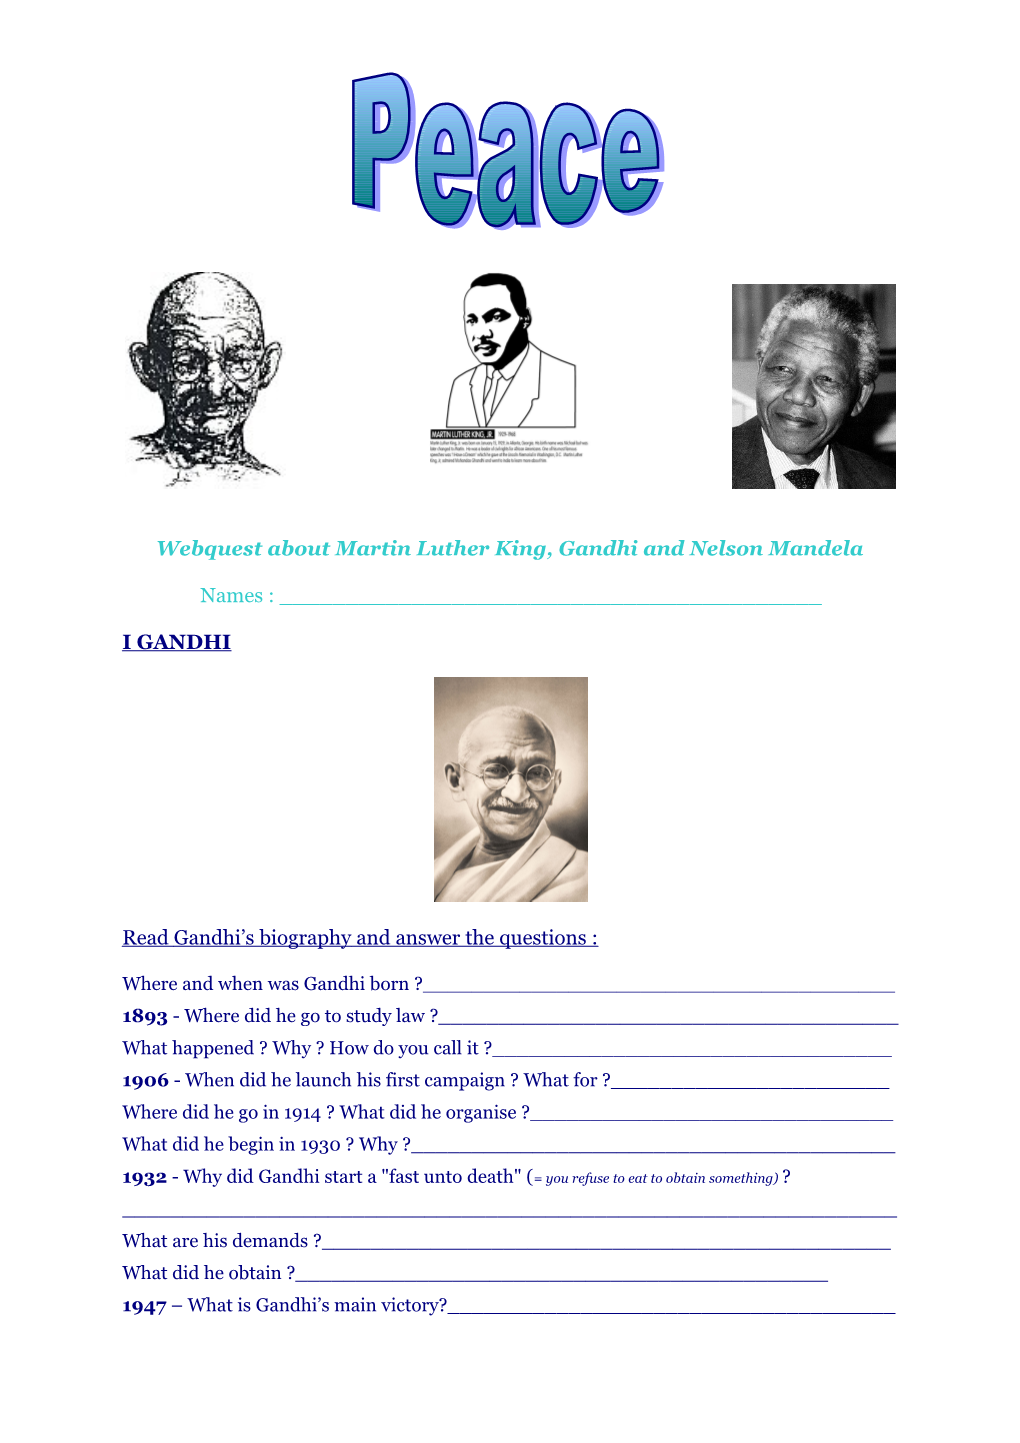 Webquest About Martin Luther King, Gandhi and Nelson Mandela